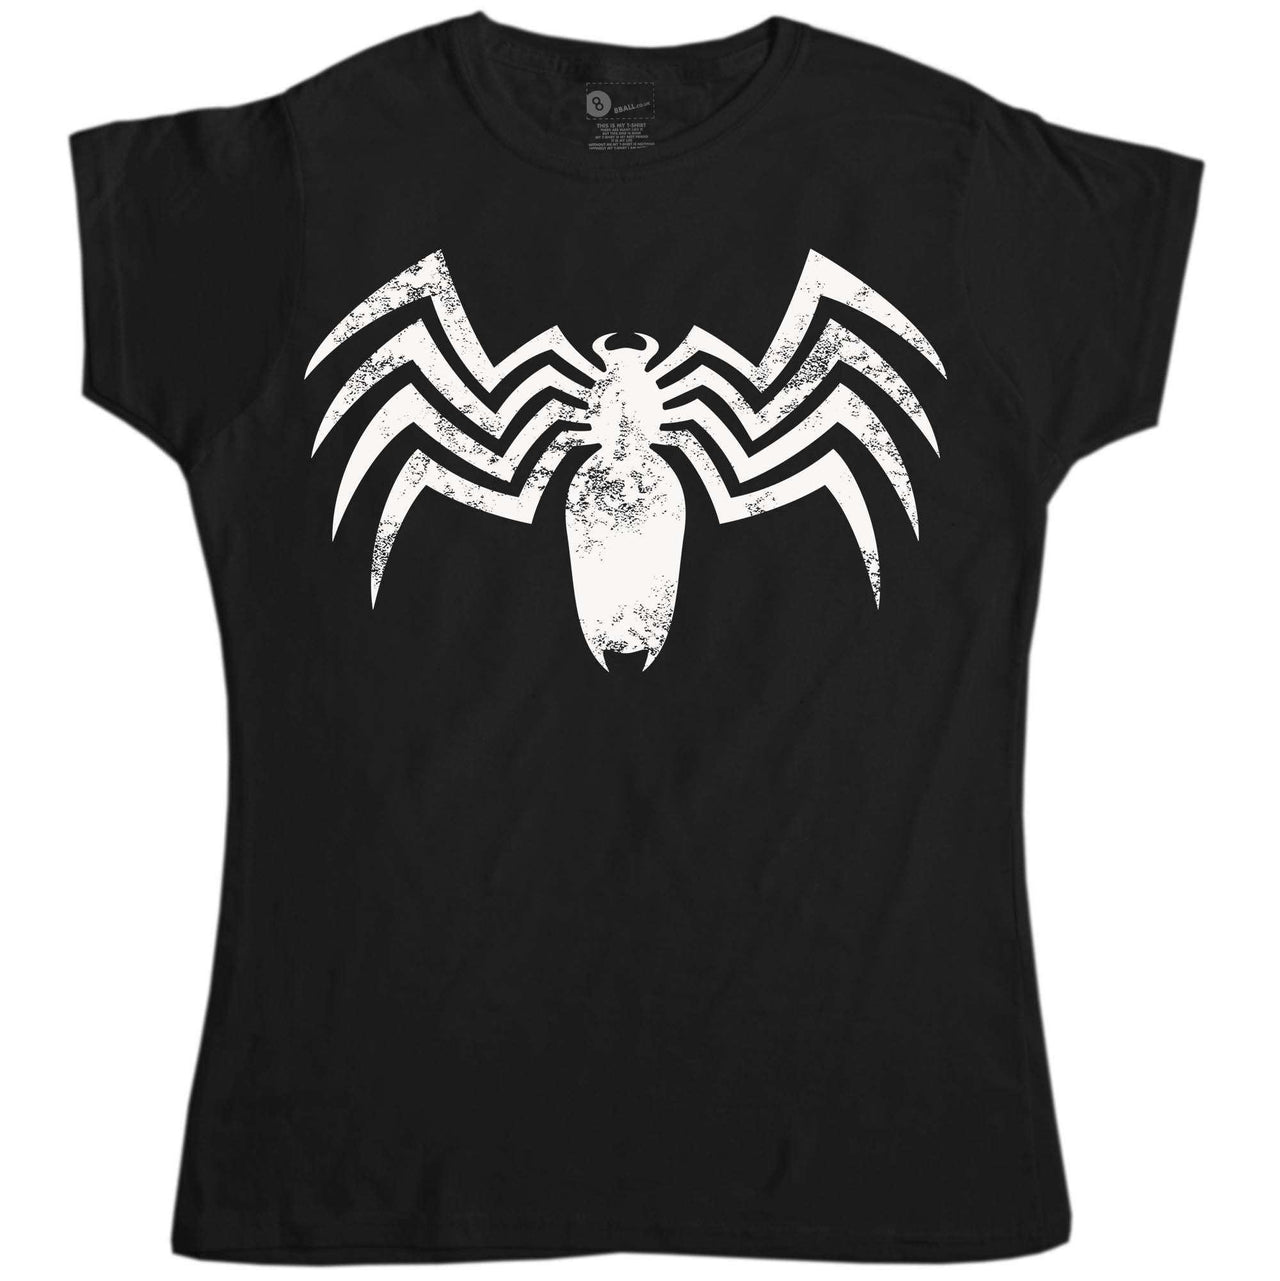 Superhero Venomous Spider Fitted Womens T-Shirt 8Ball